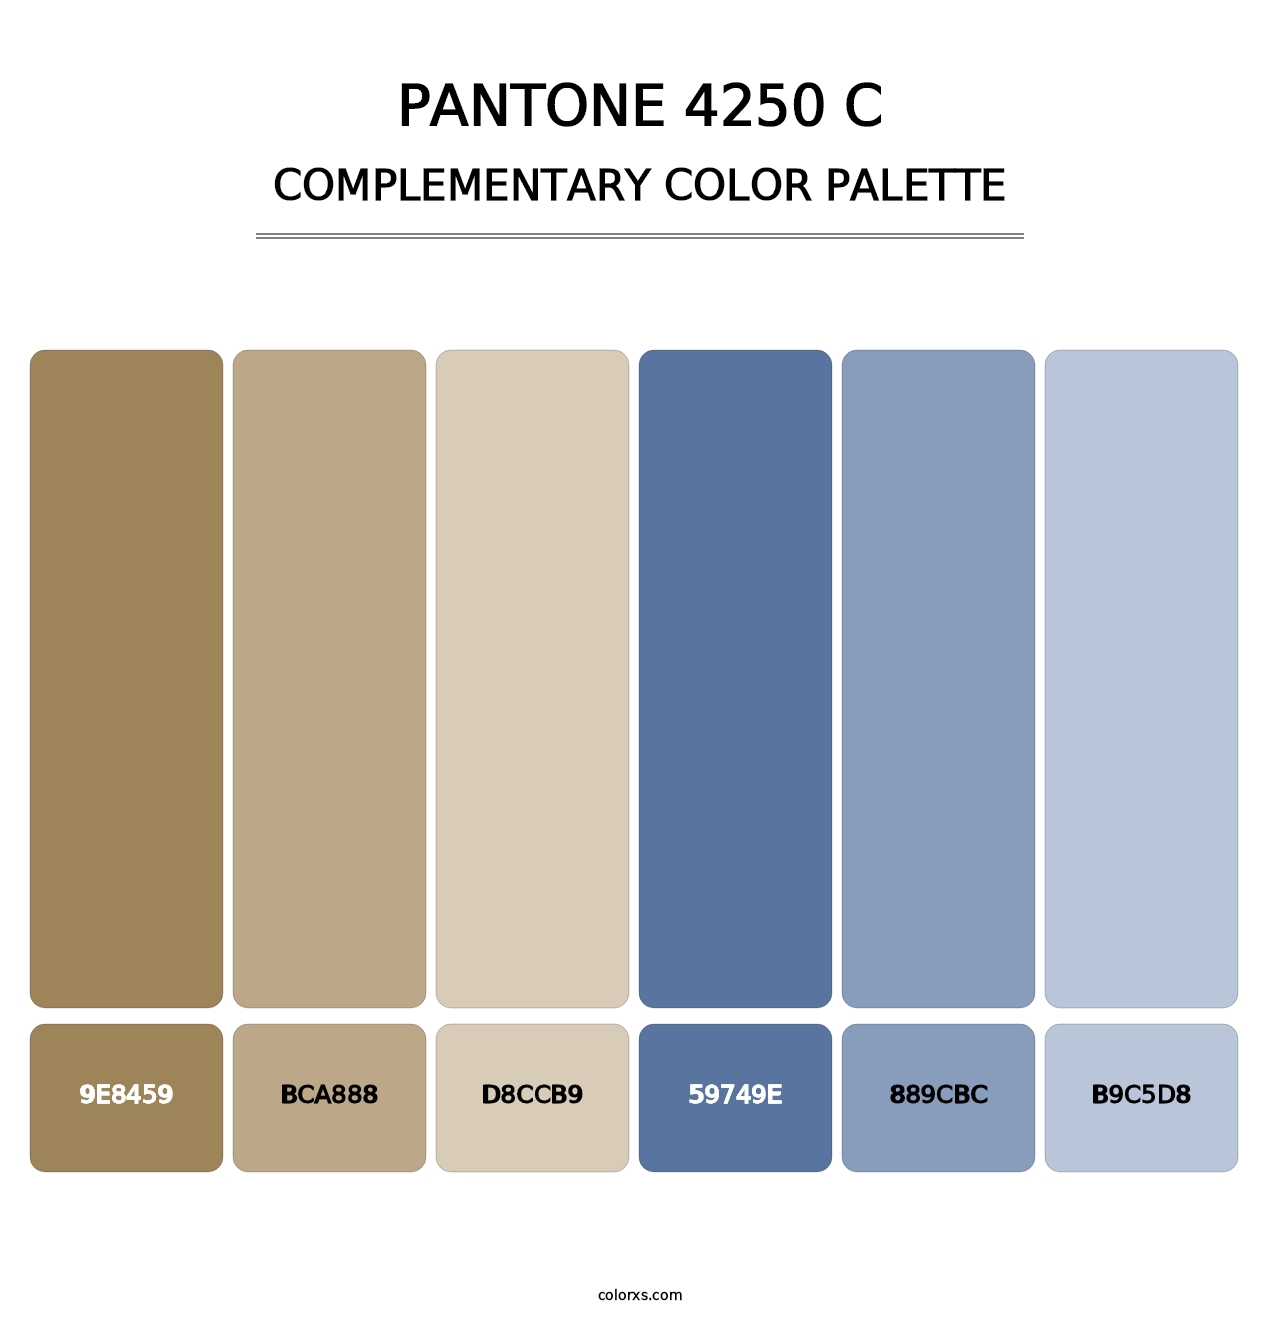 PANTONE 4250 C - Complementary Color Palette